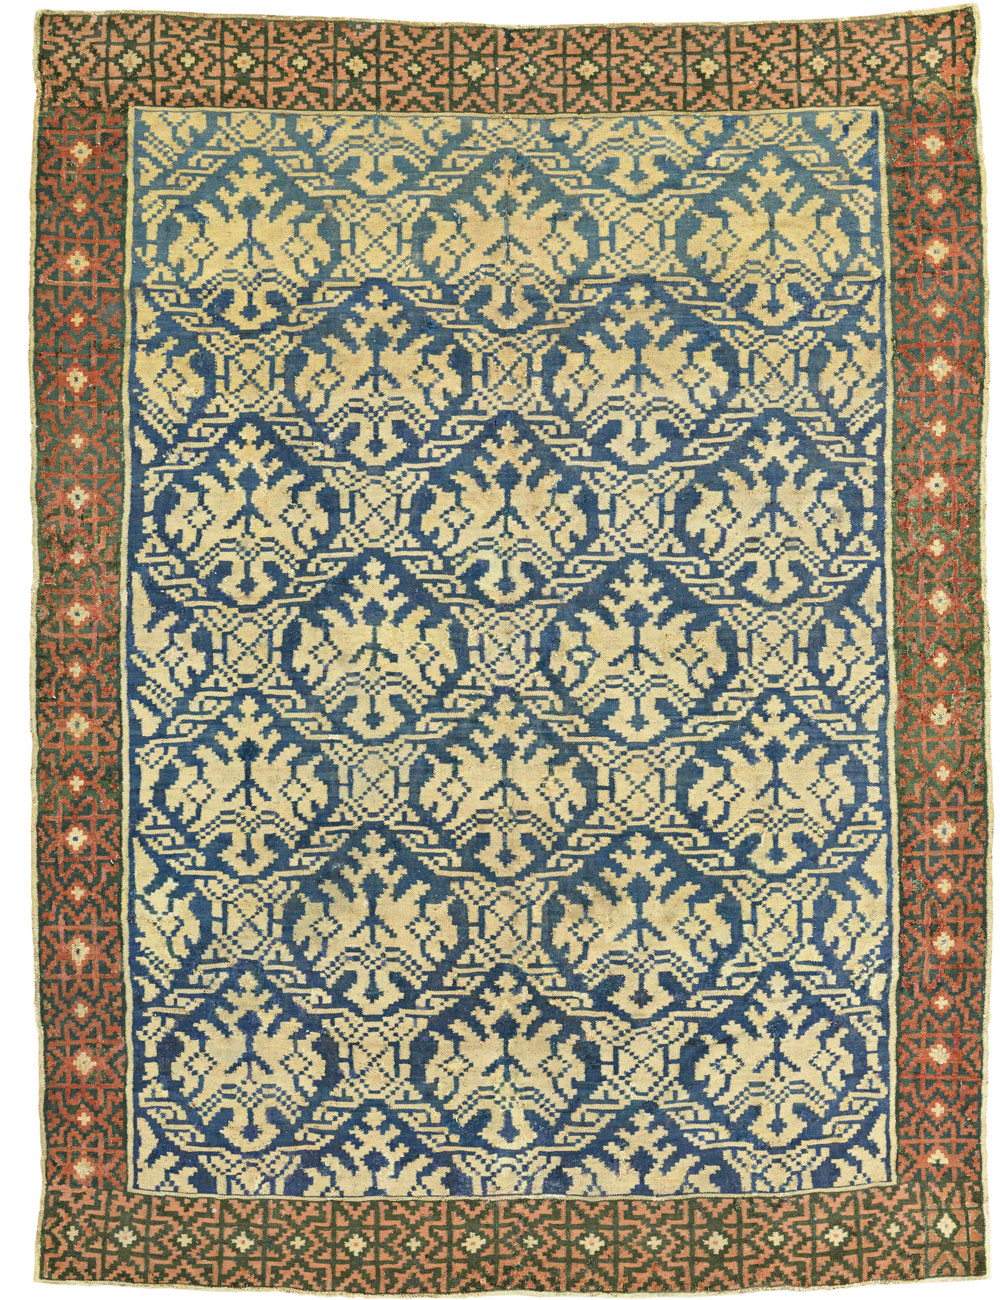 Carpet, Spain, possibly Alcaraz